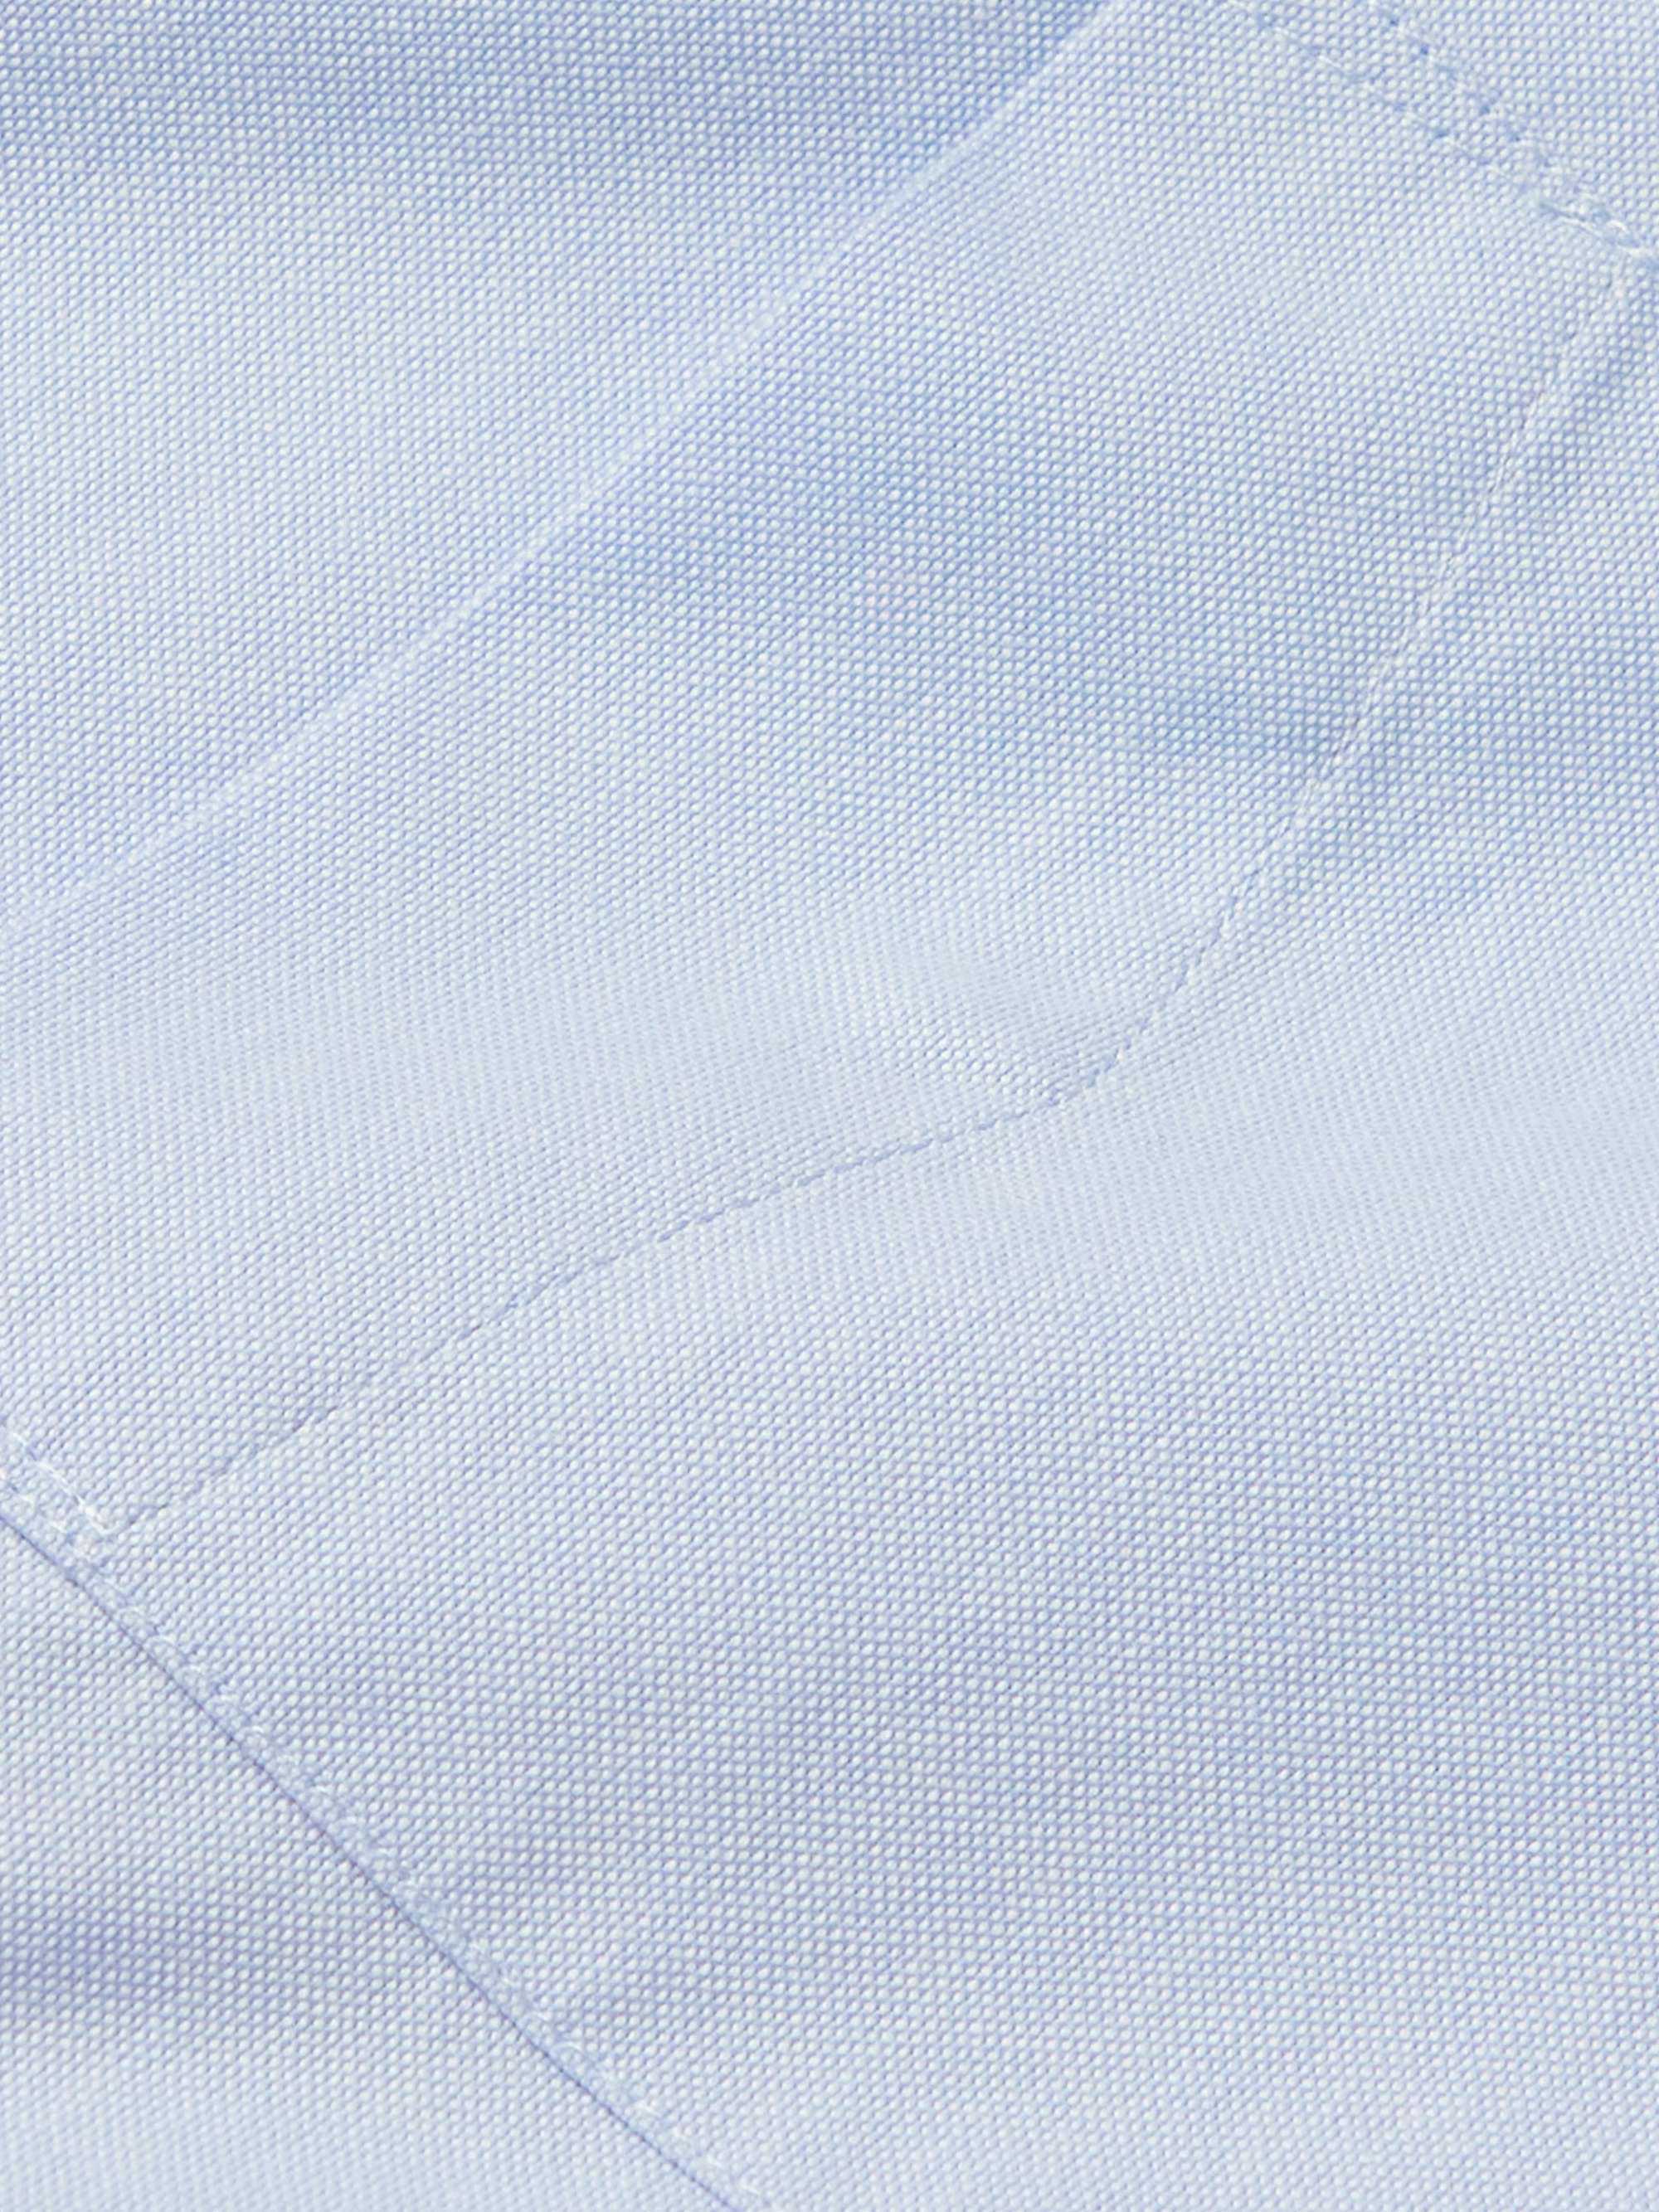 MR P. Button-Down Collar Cotton Oxford Shirt